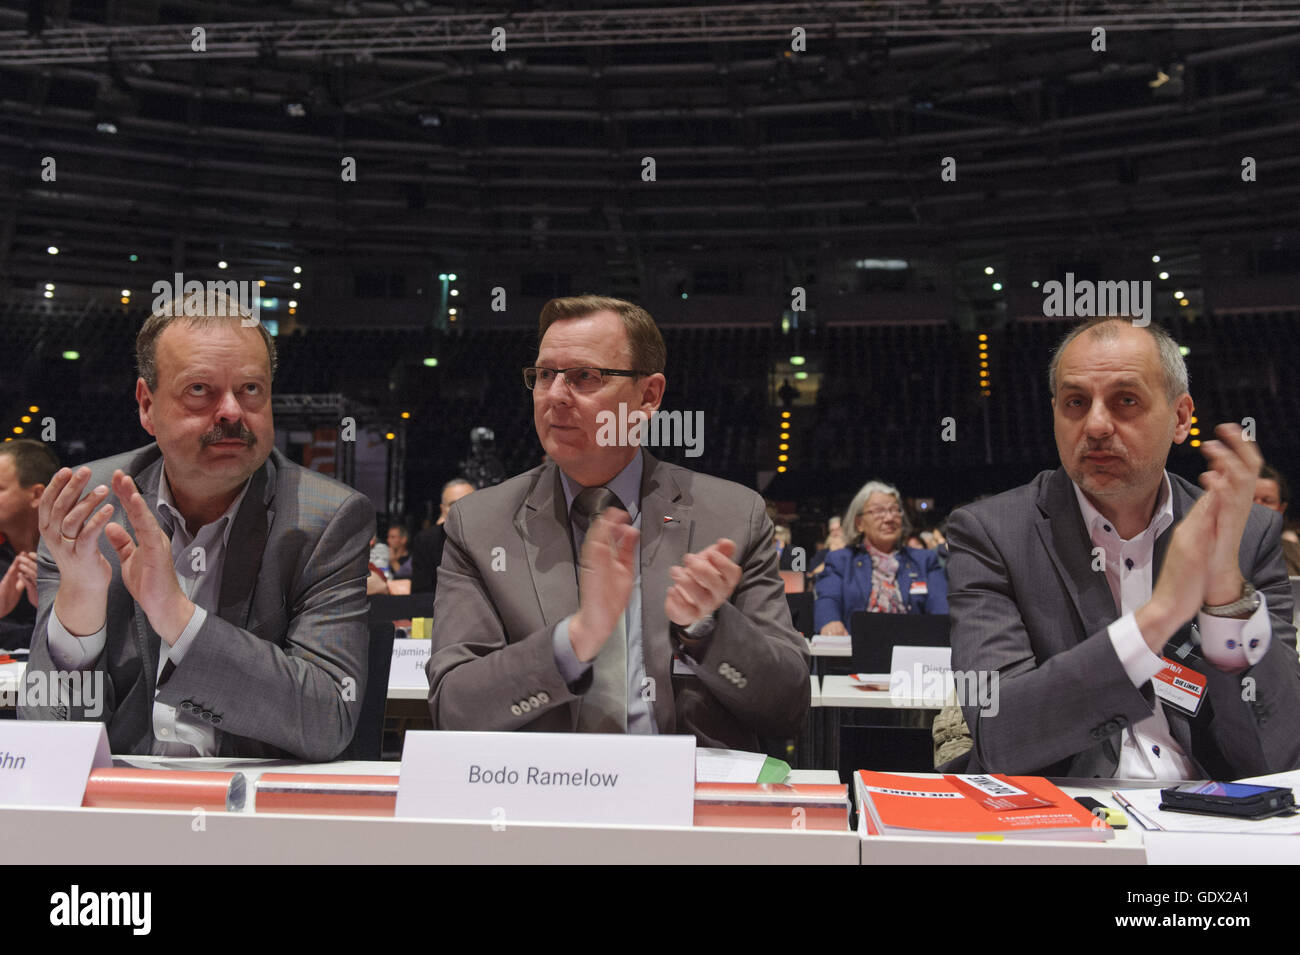 Wulf Galler, Bodo Ramelow et Rico Gebhardt à Berlin, Allemagne, 2014 Banque D'Images